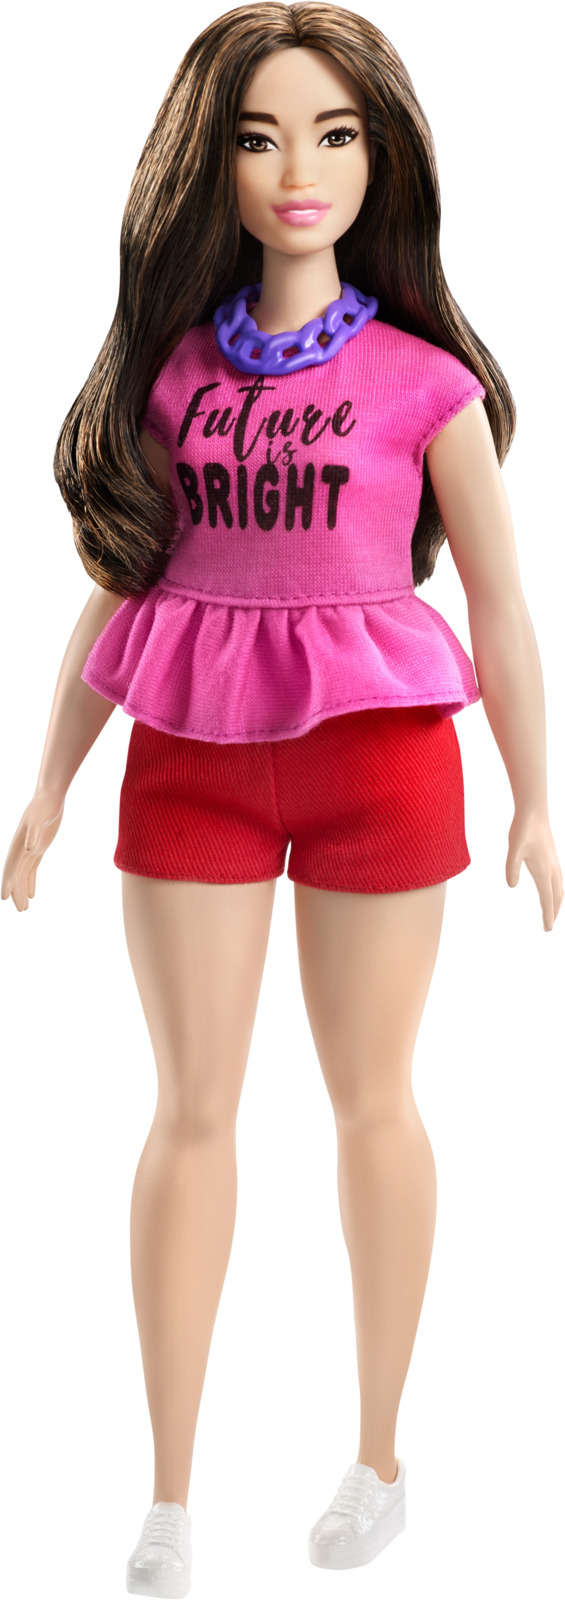 Кукла Barbie Fashionistas №98, FBR37_FJF58